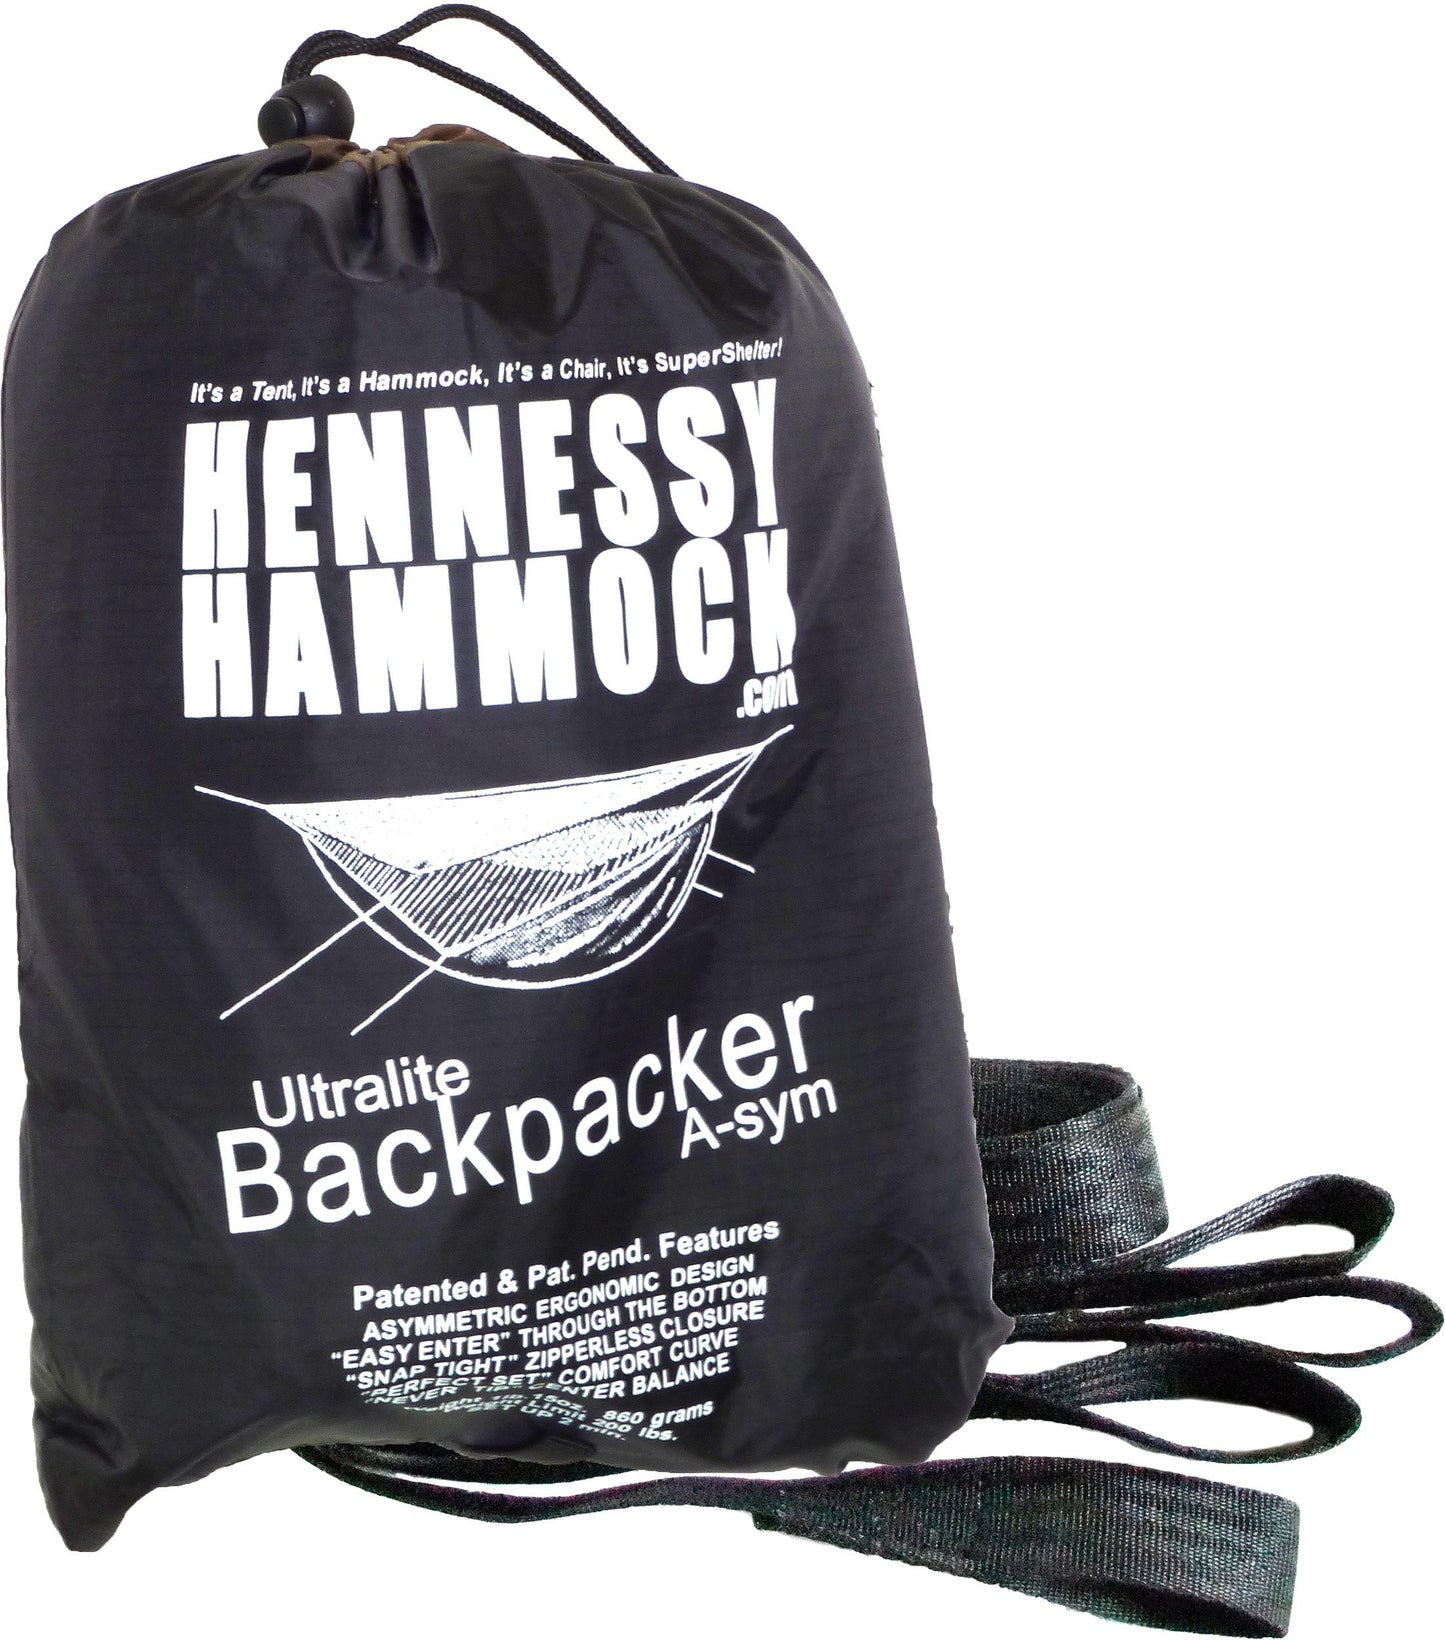 Ultralite Backpacker Classic - Hennessy Hammock